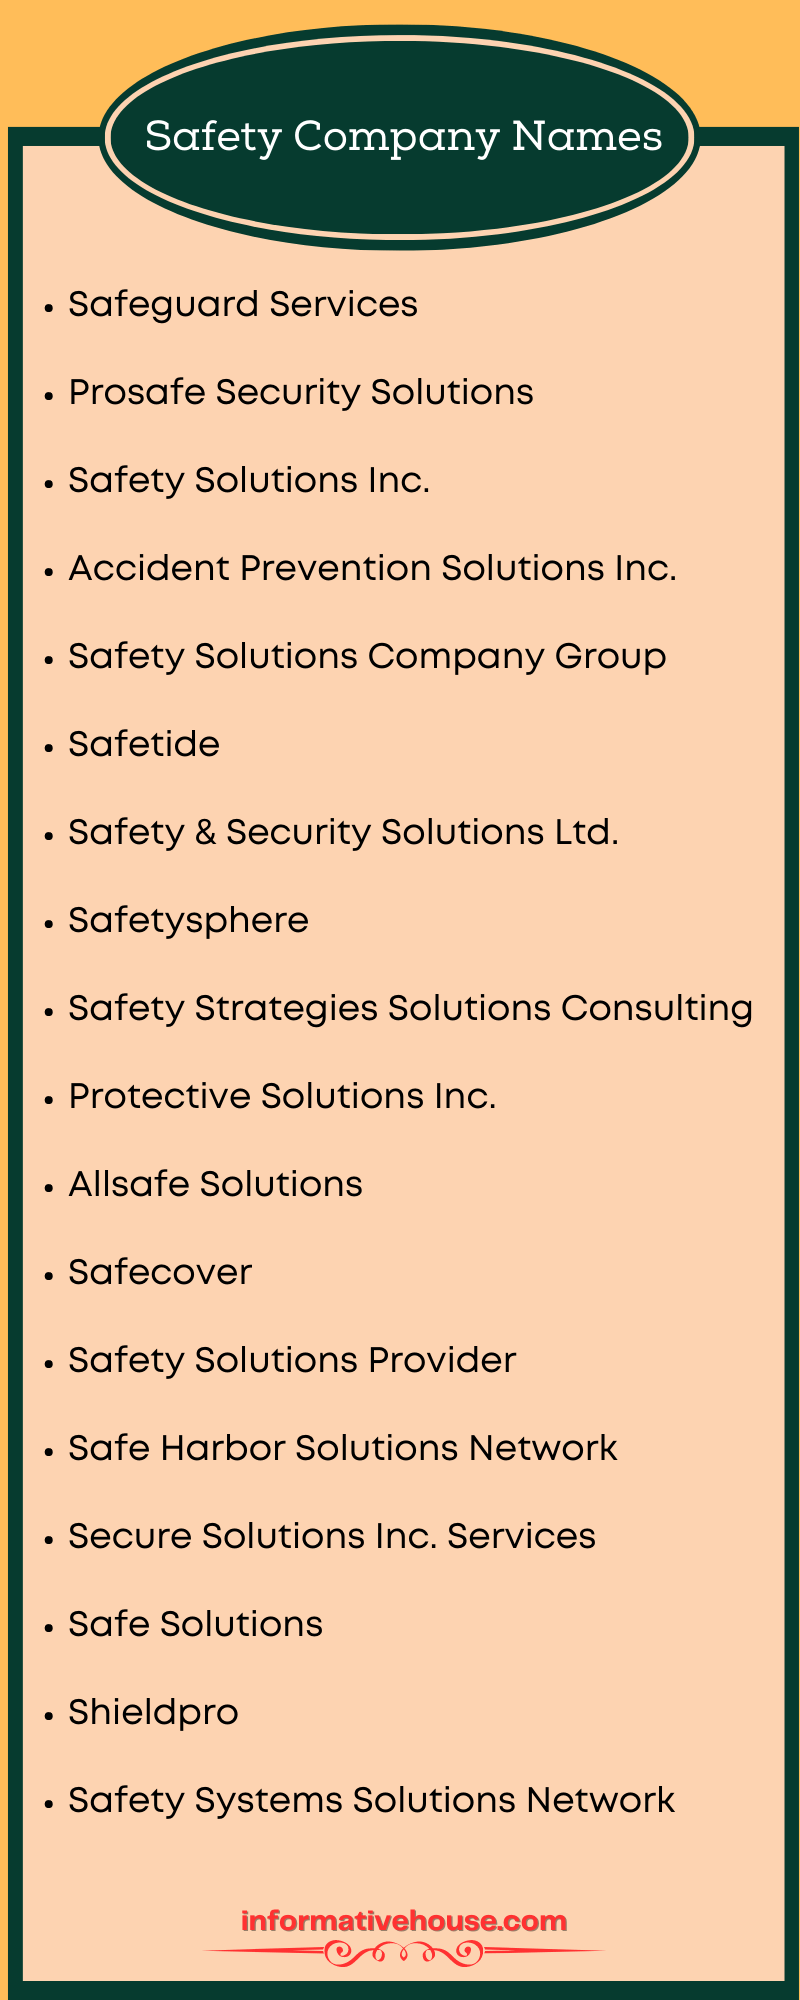 Safety Company Names